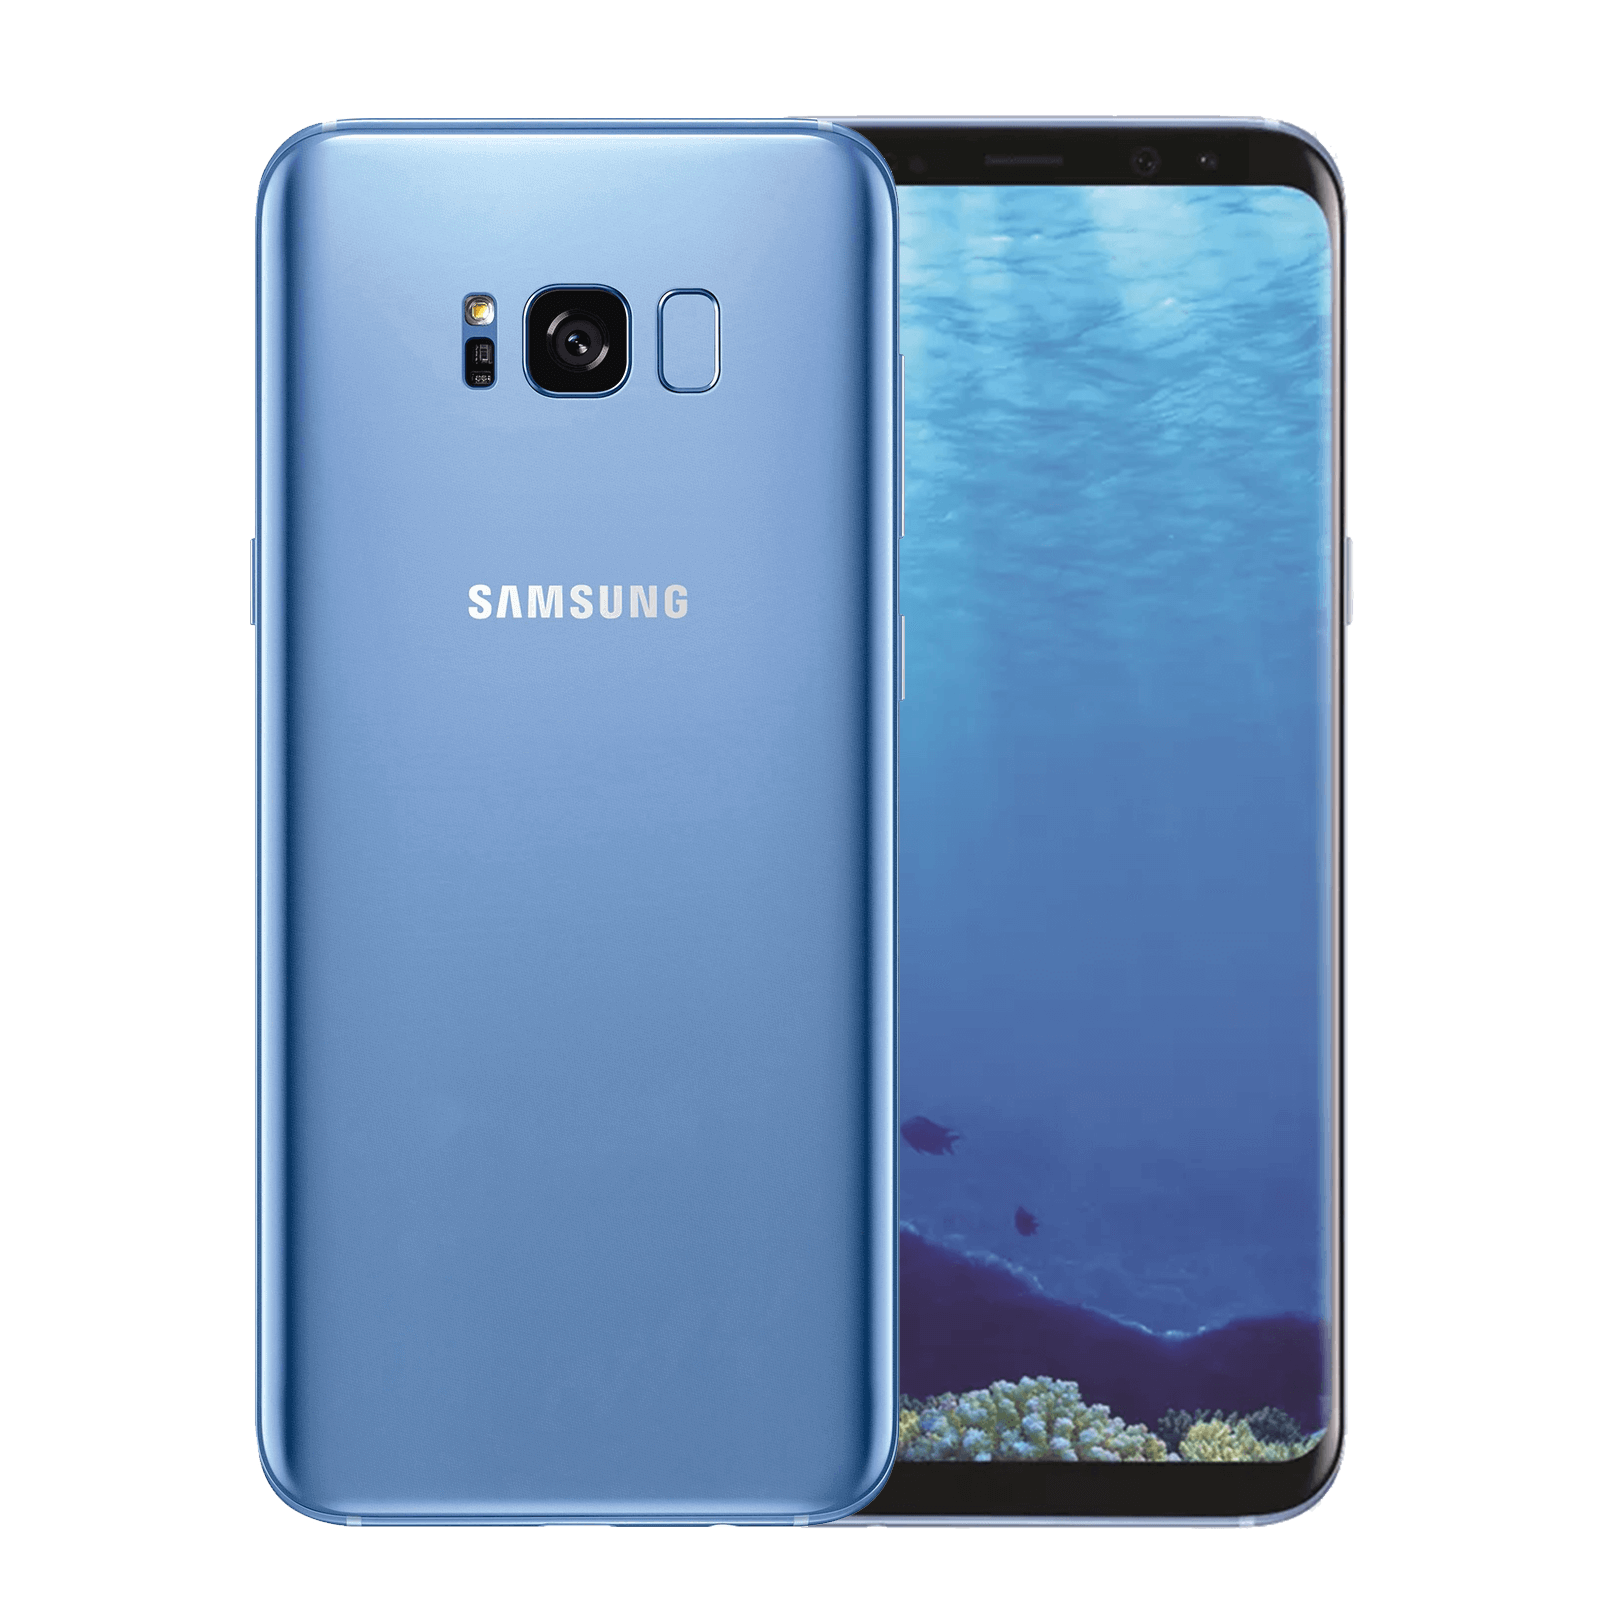 Samsung Galaxy S8 64GB Blue G950F Pristine - Unlocked 64GB Blue Pristine